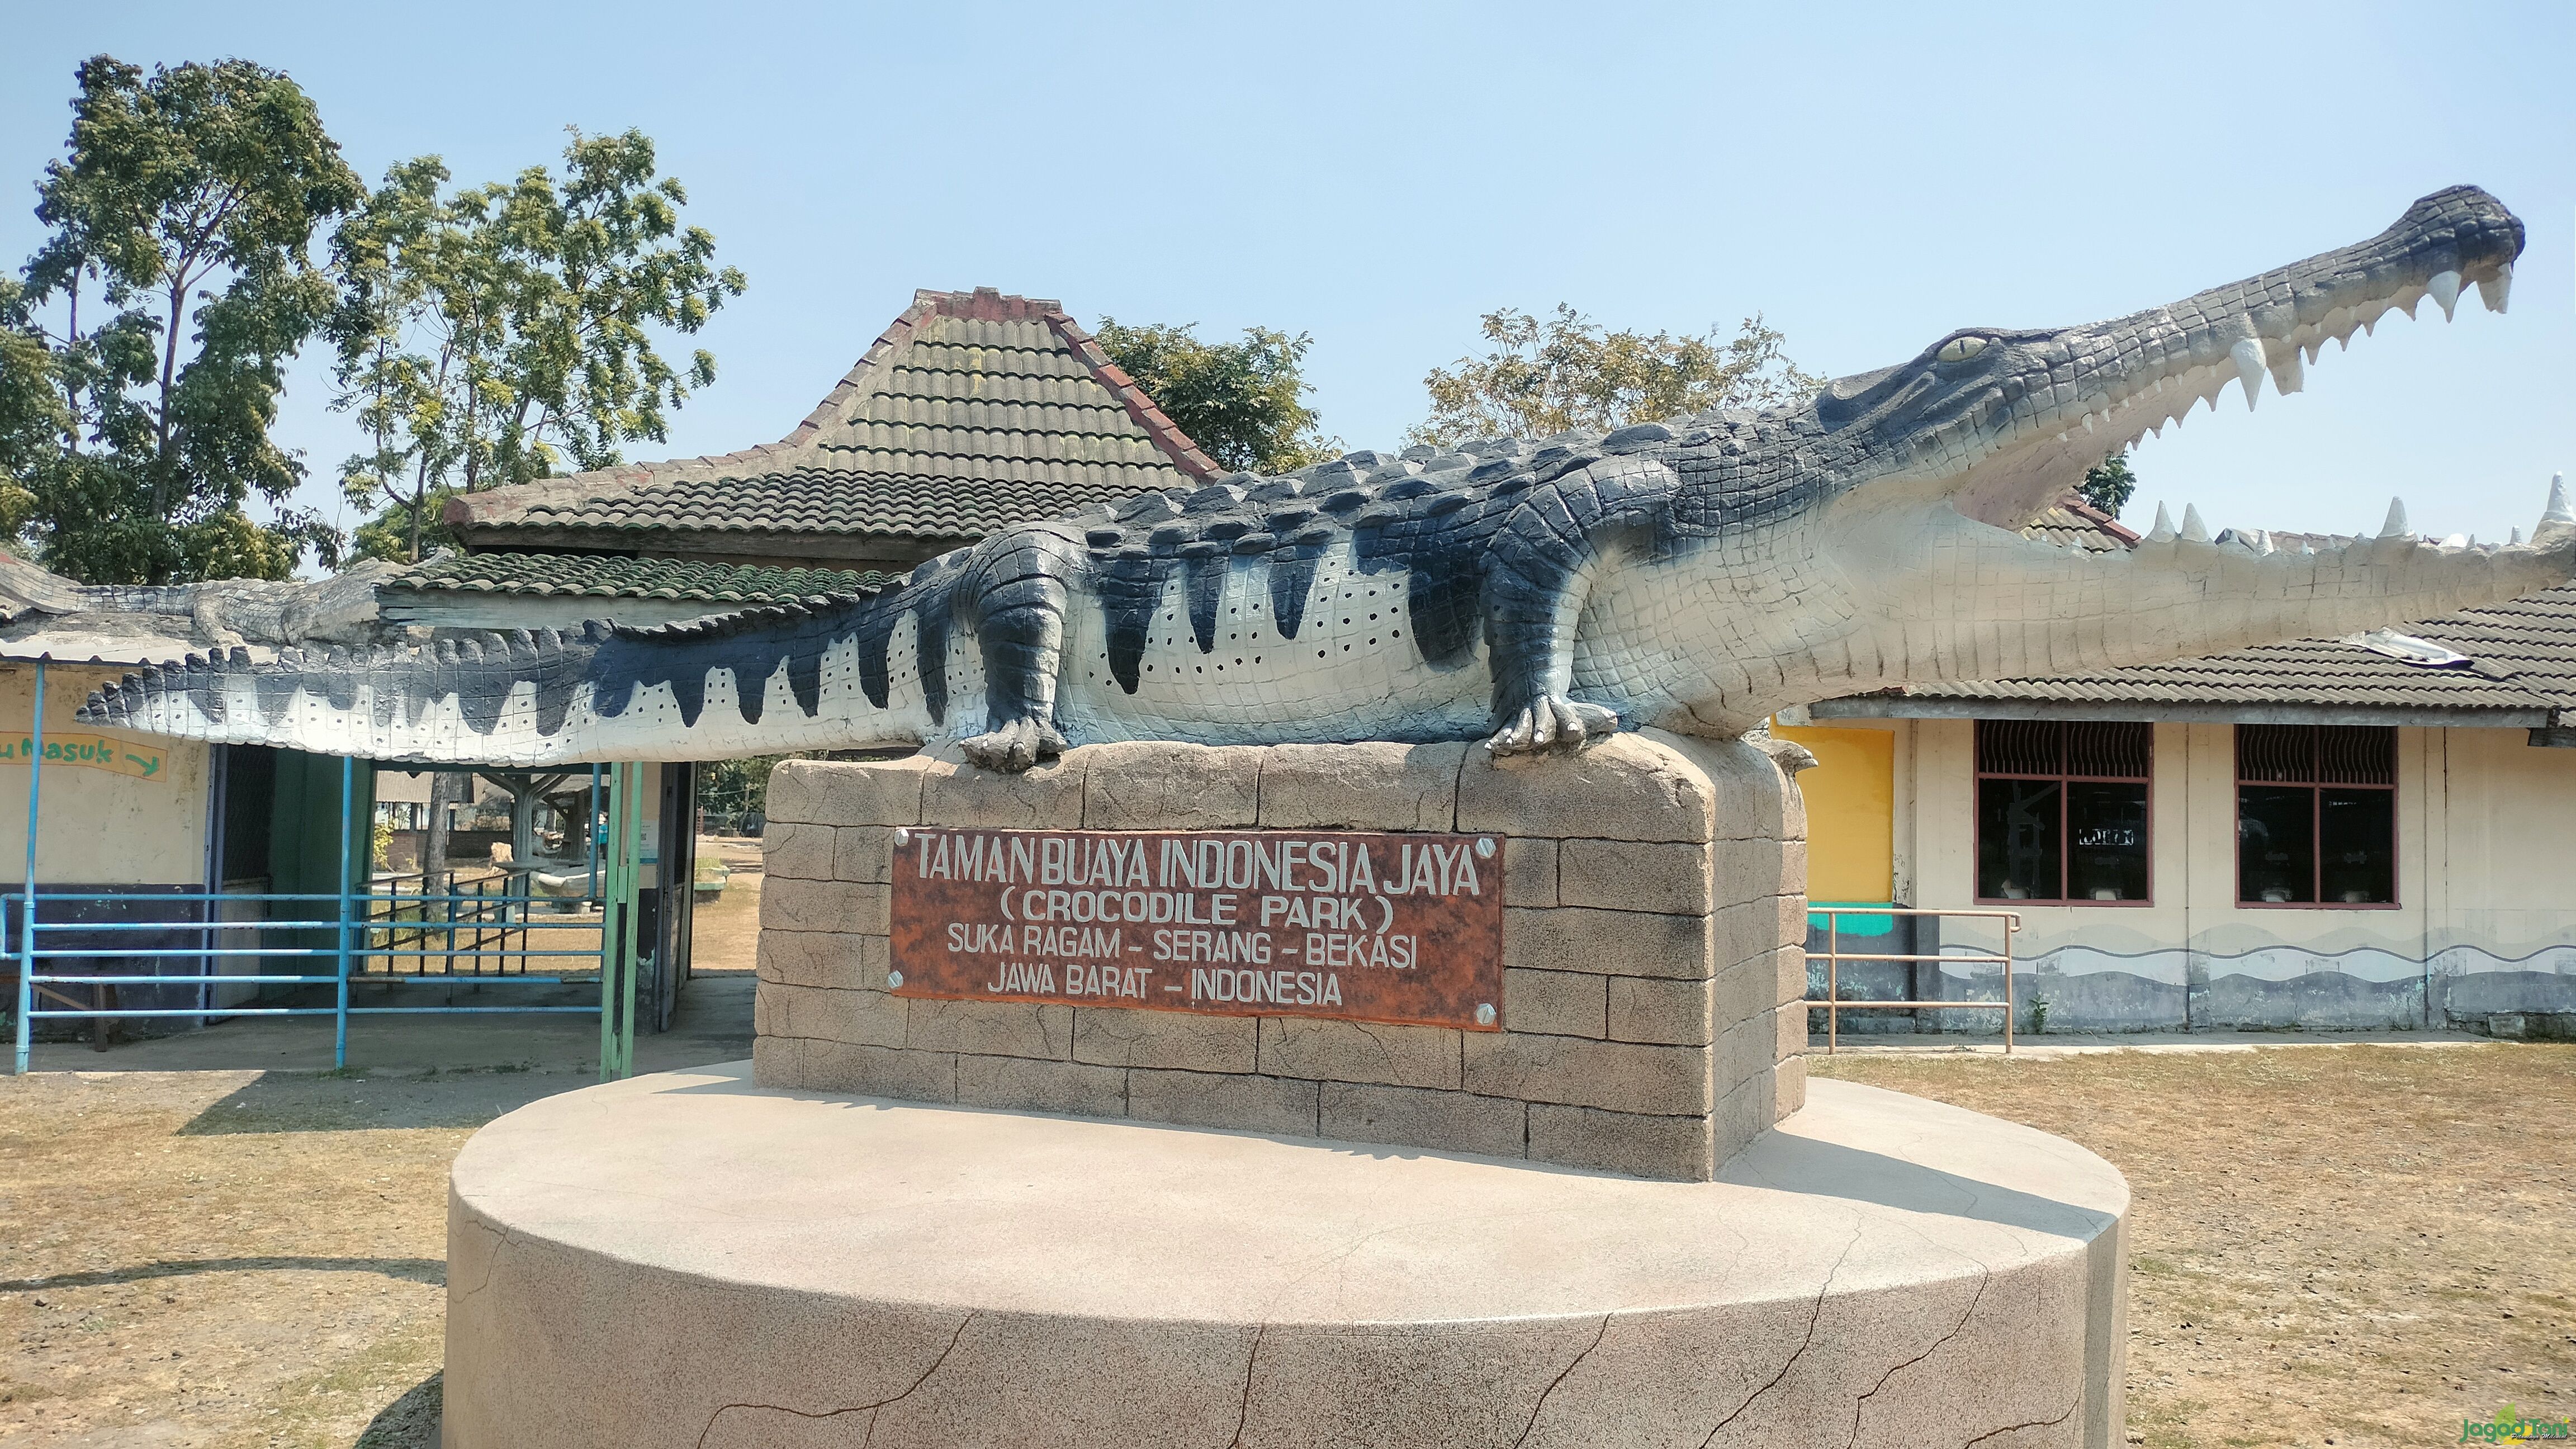  Taman Buaya Indonesia Jaya Bekasi